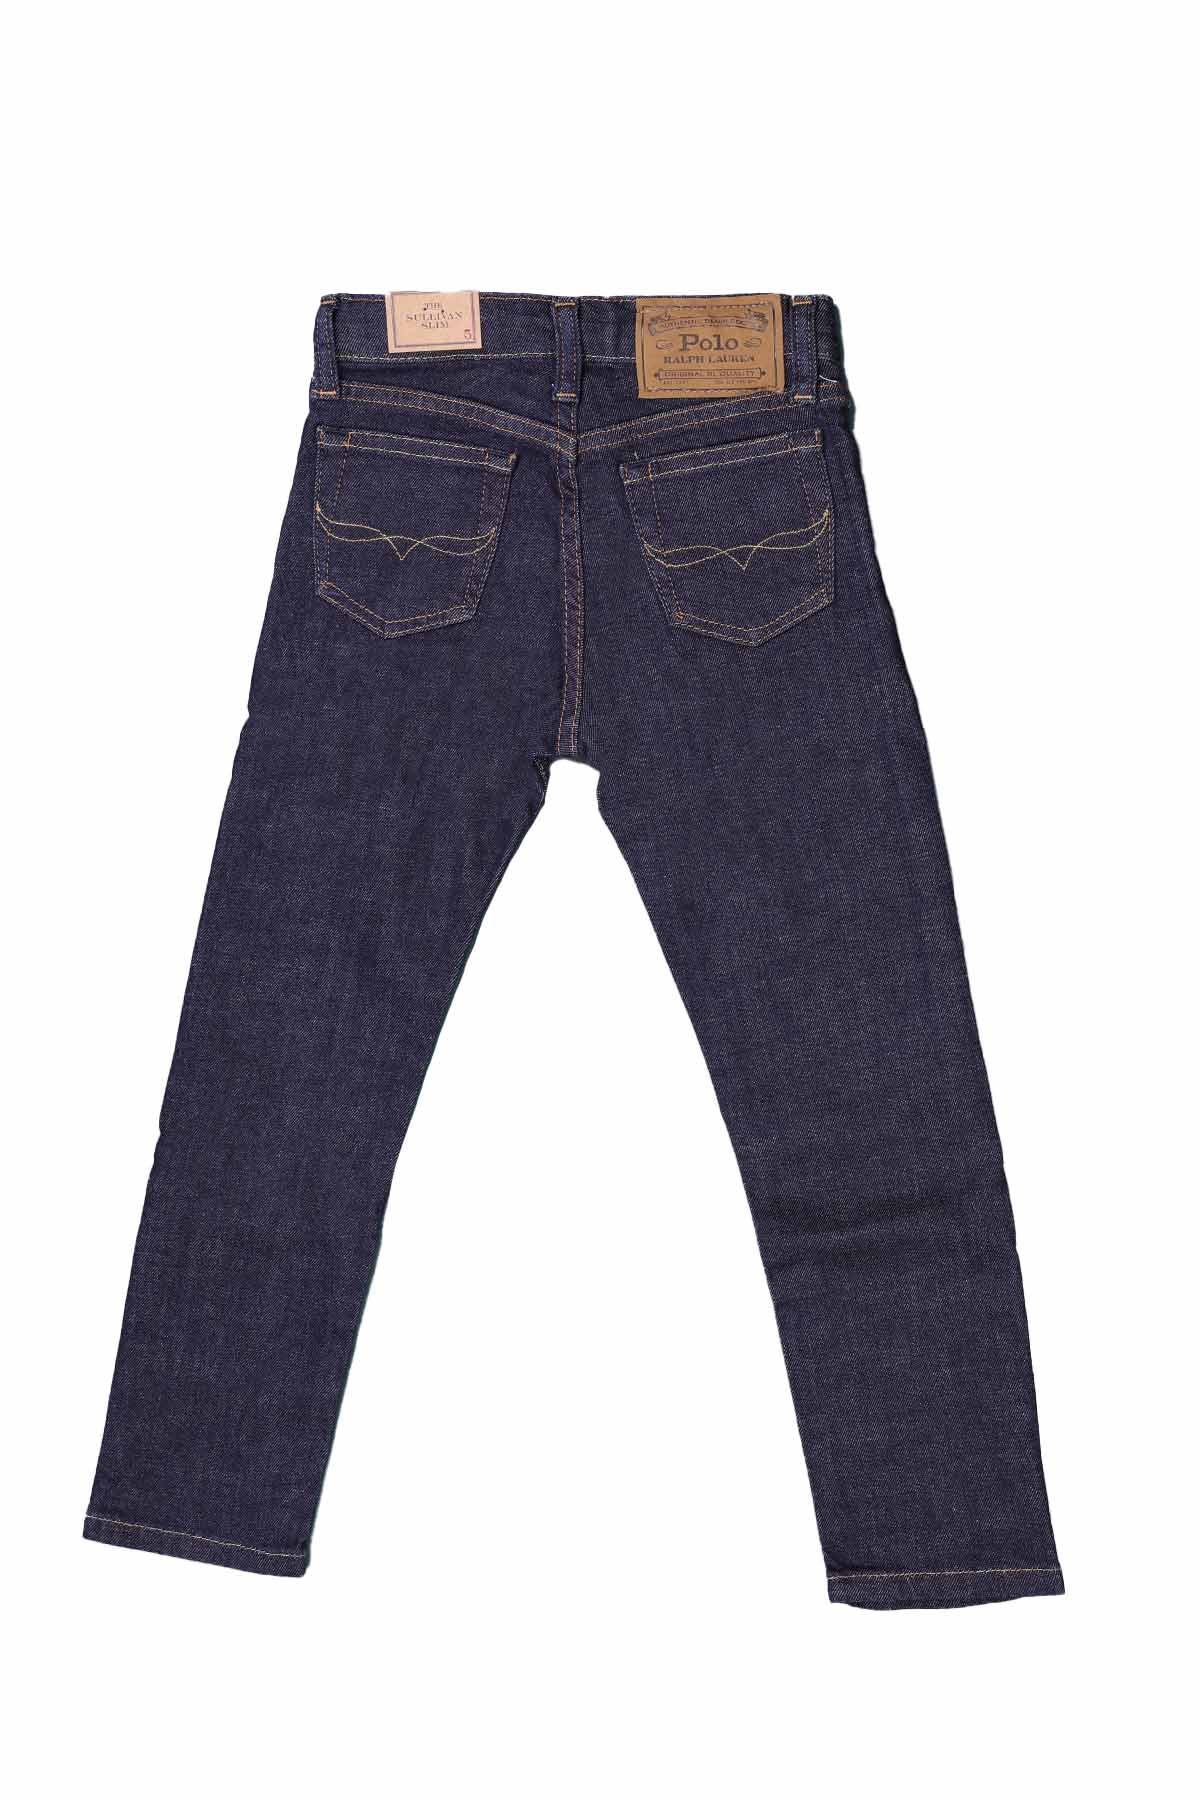 Polo Ralph Lauren 5-7 Yaş Erkek Jeans-Libas Trendy Fashion Store